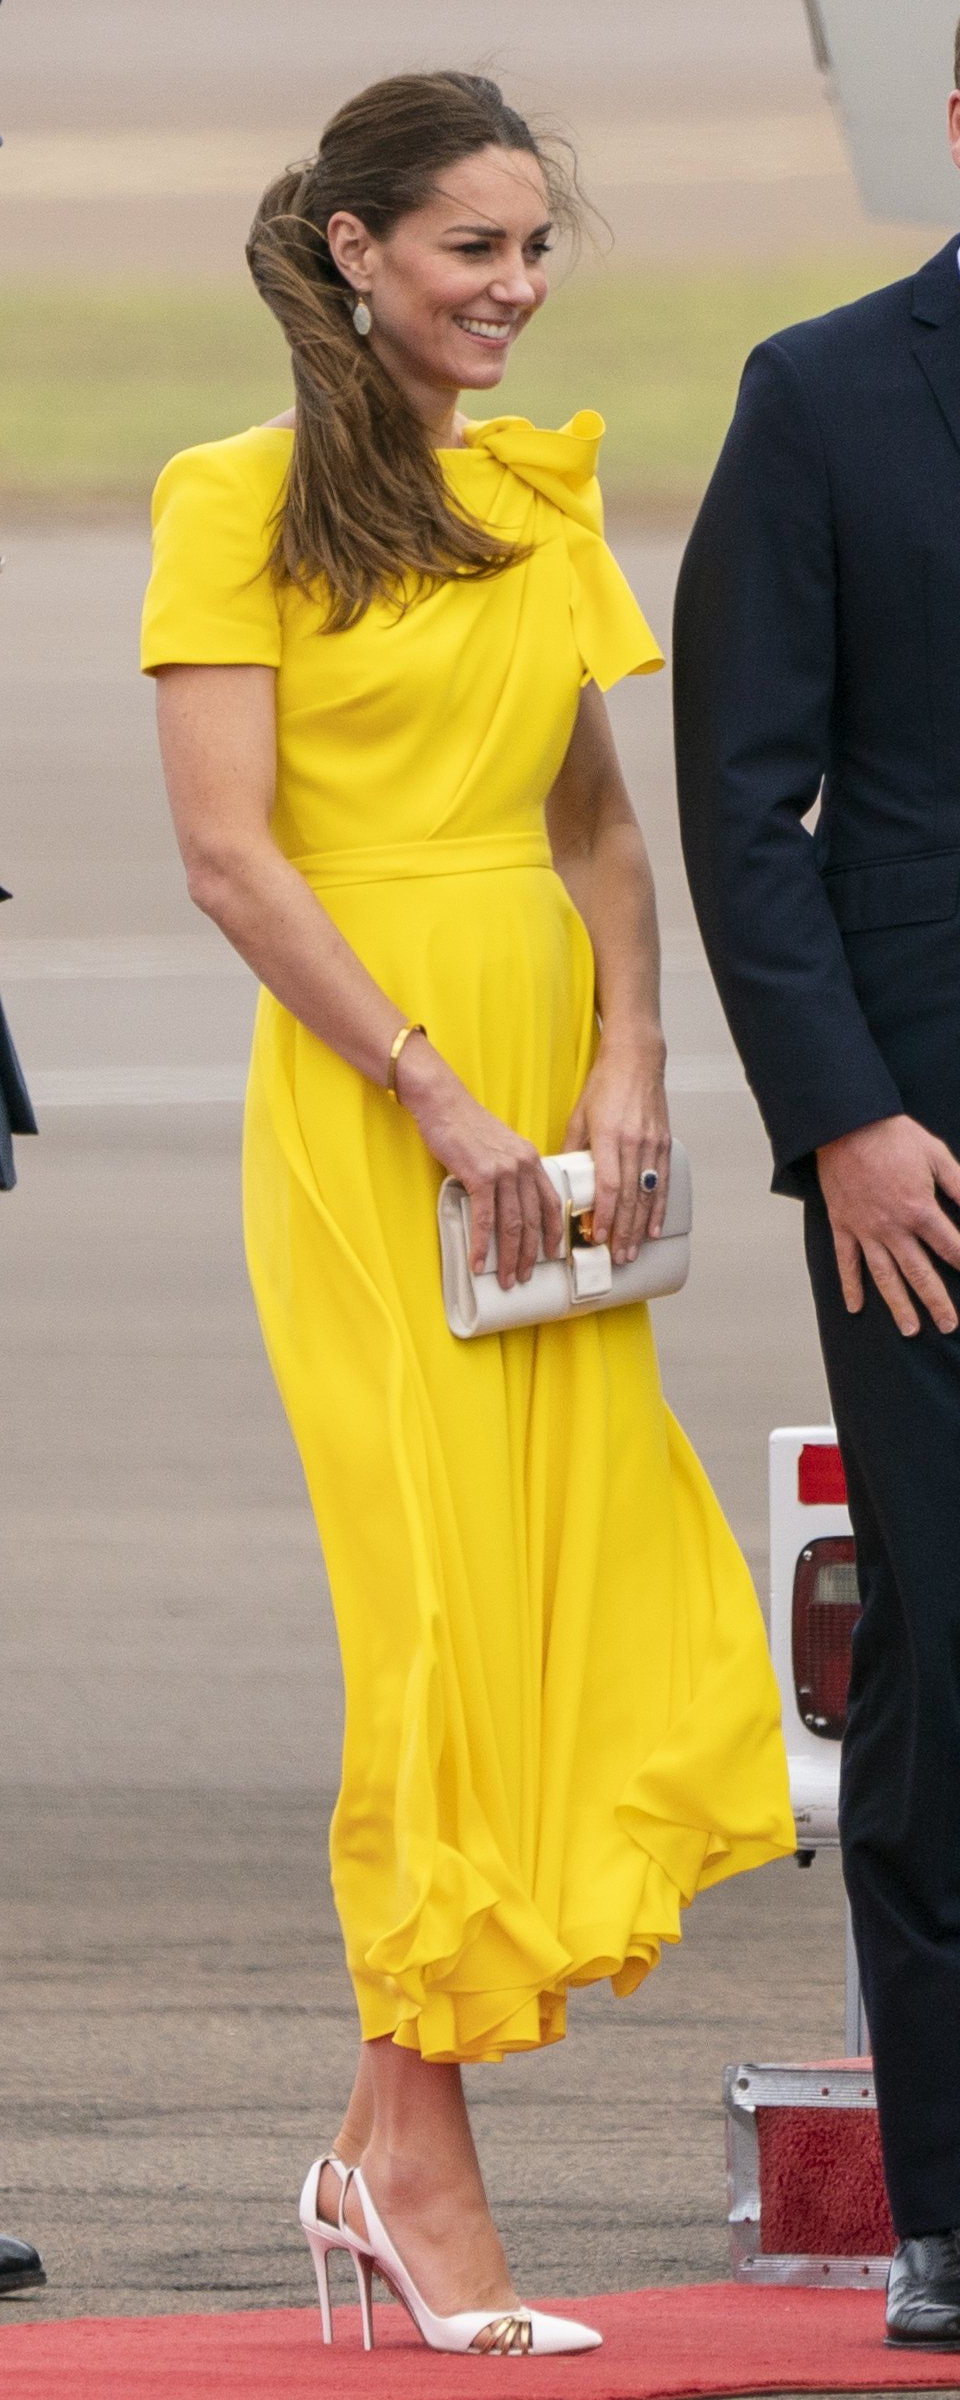 Roksanda Brigitte Bow-Shoulder Dress in Marigold as seen on Kate Middleton, The Duchess of Cambridge.